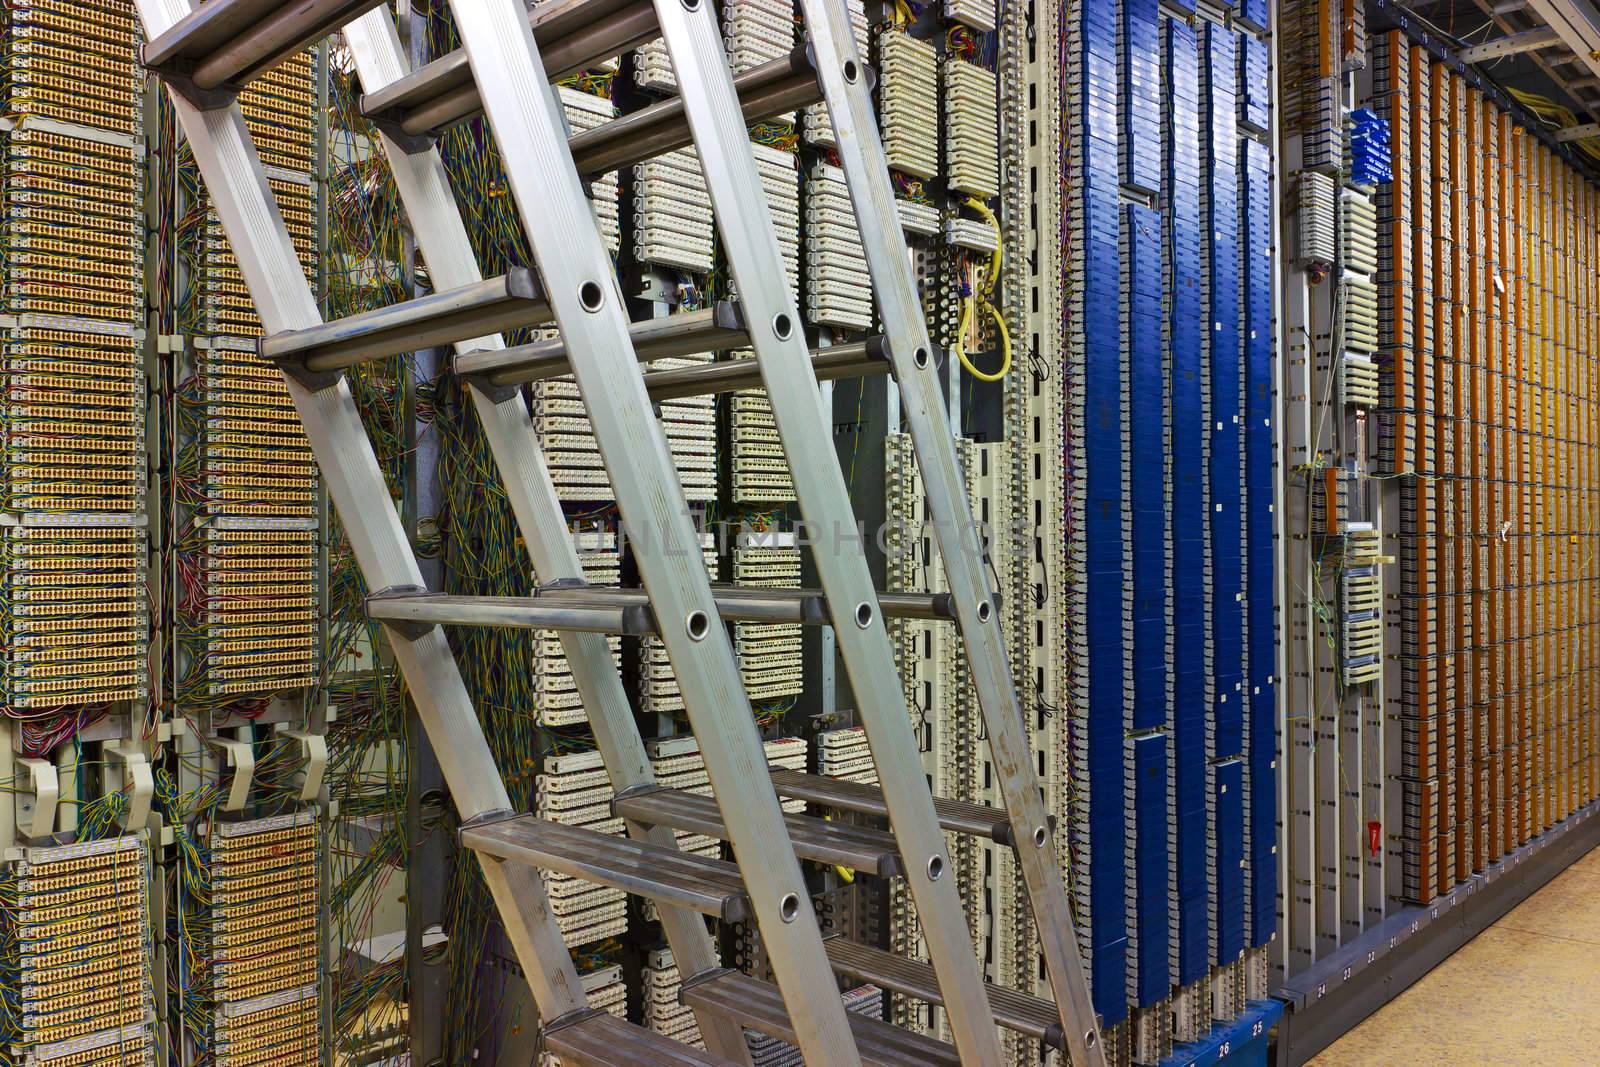 Server room and control board by sutipp11